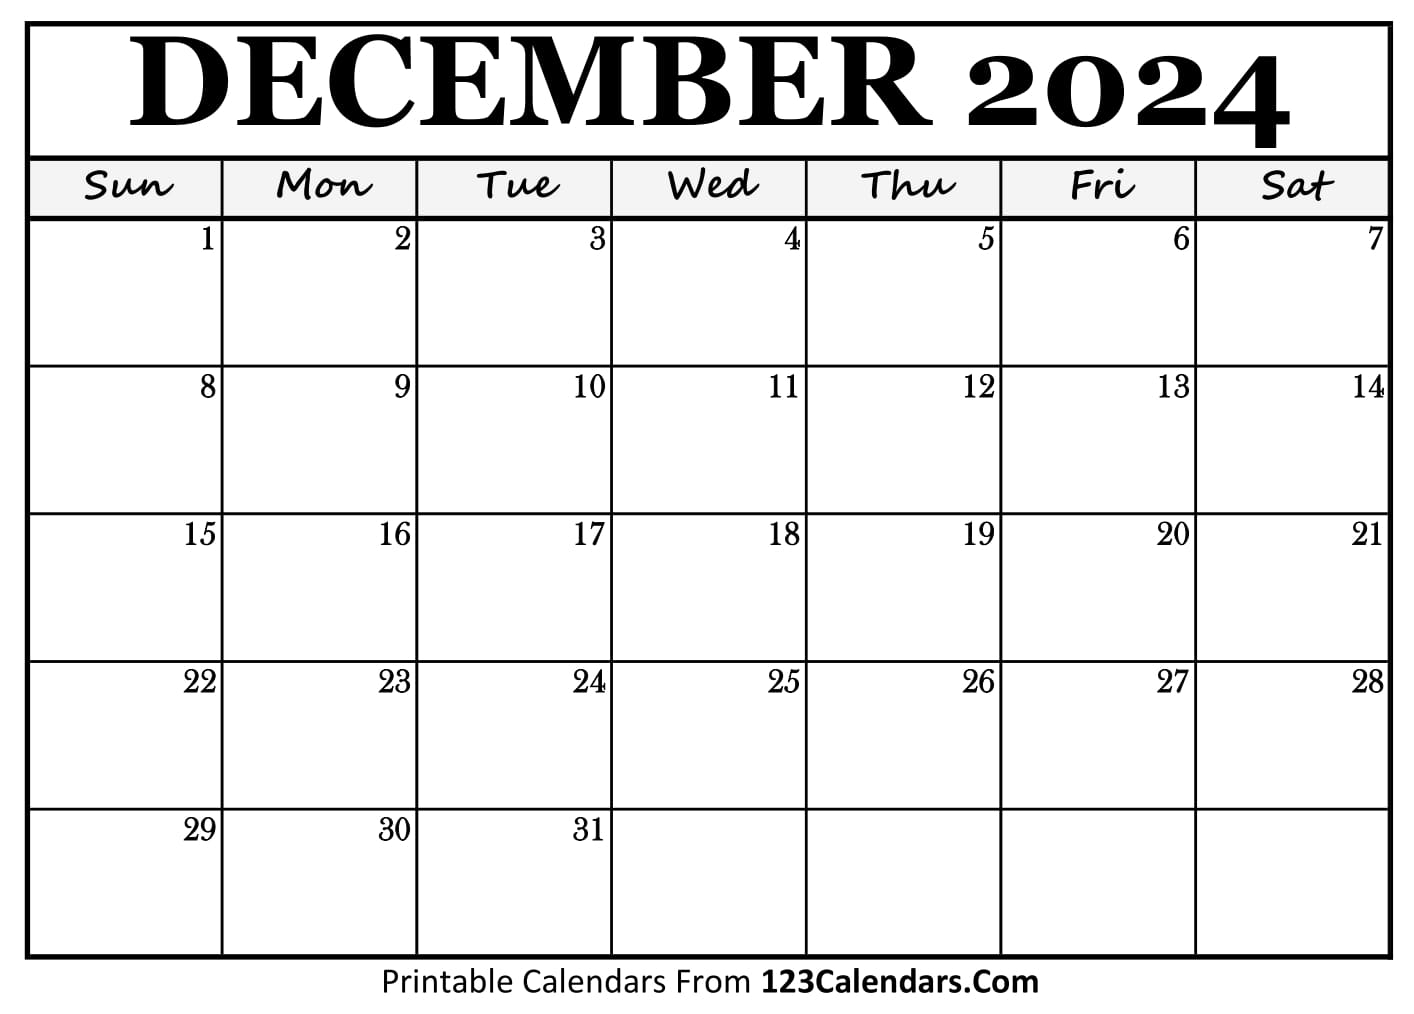 December Calendar 2024